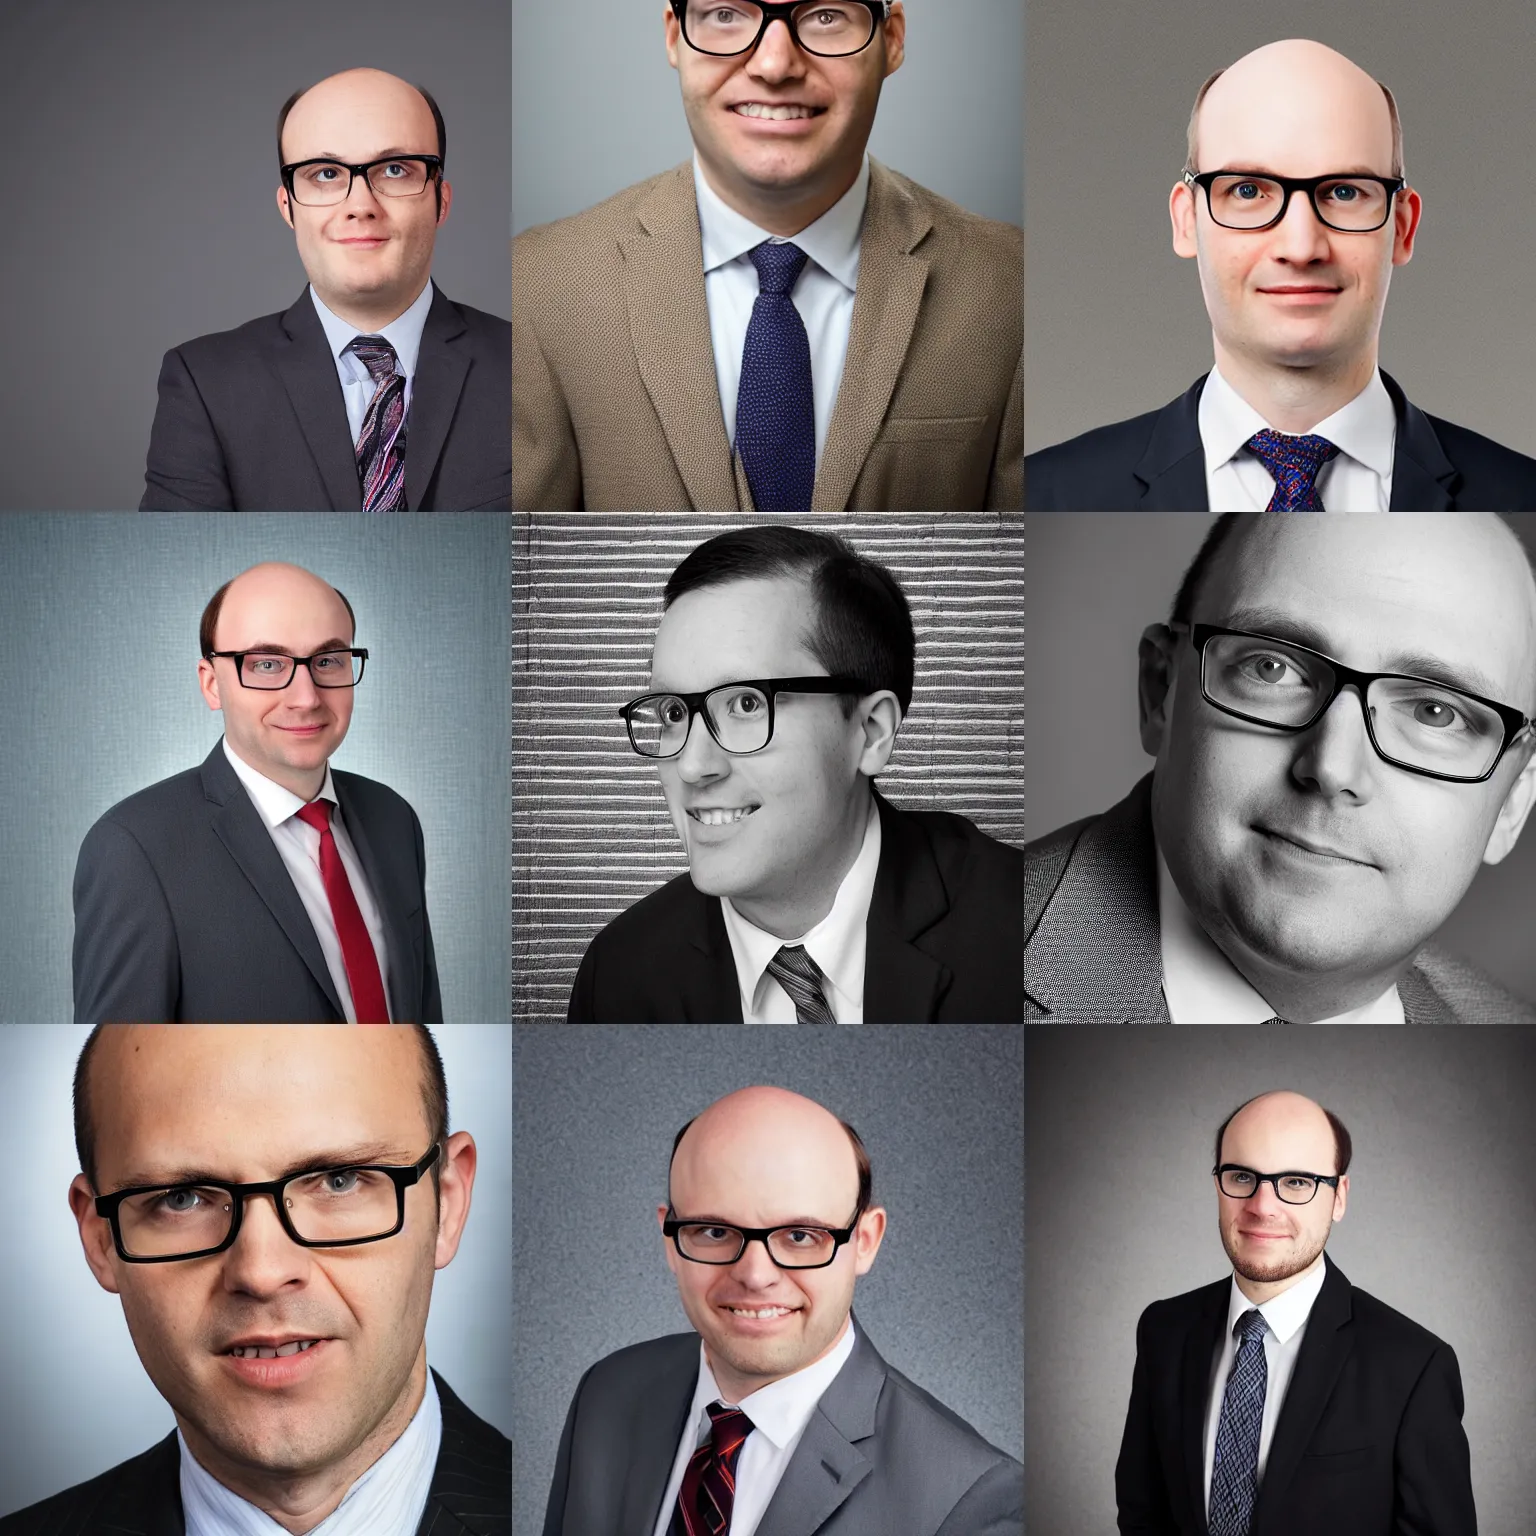 Prompt: balding math teacher with glasses in a suit, portrait photo